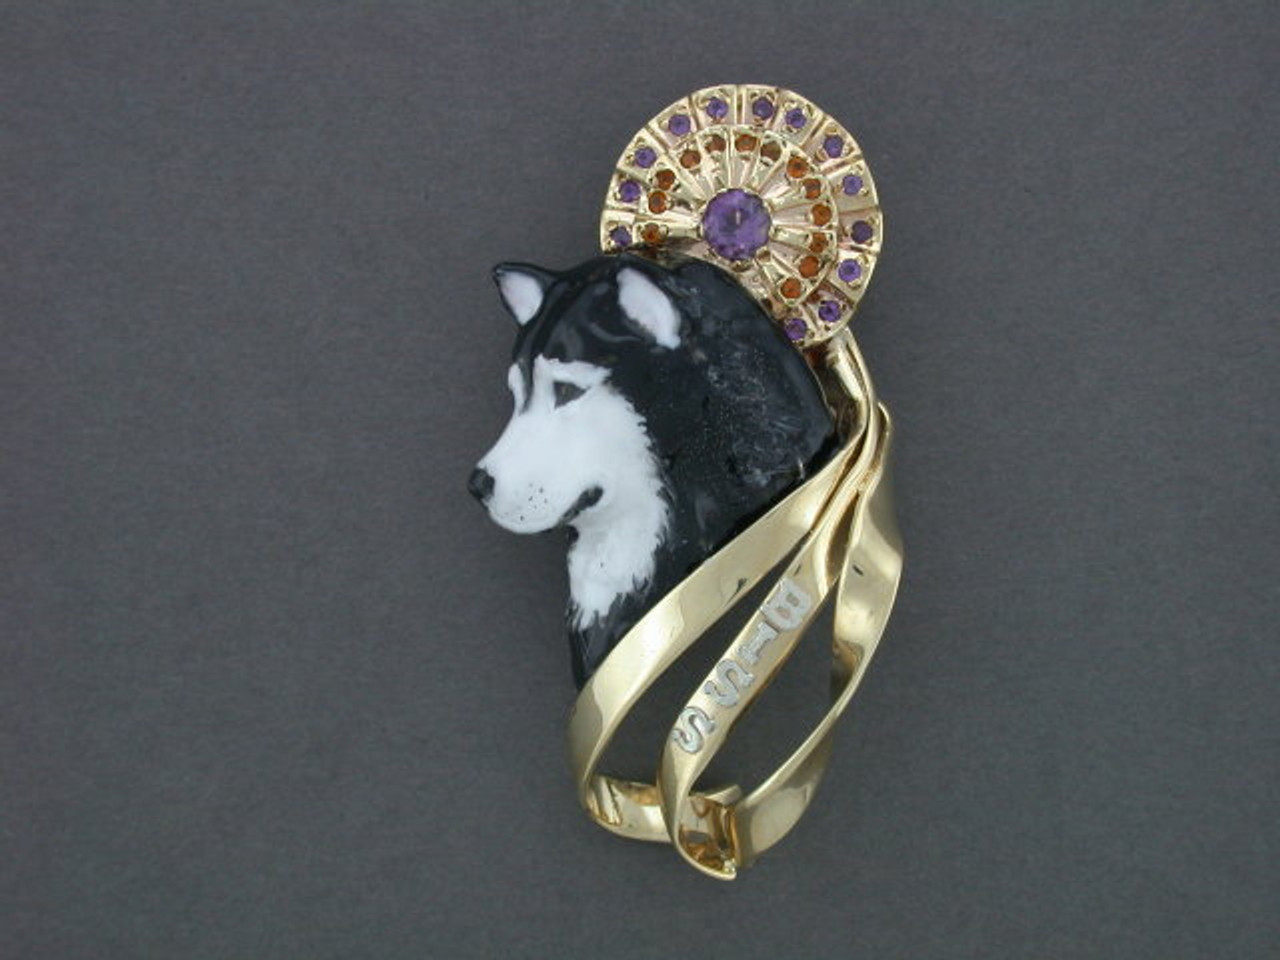 Alaskan Malamute with Rosette pendant